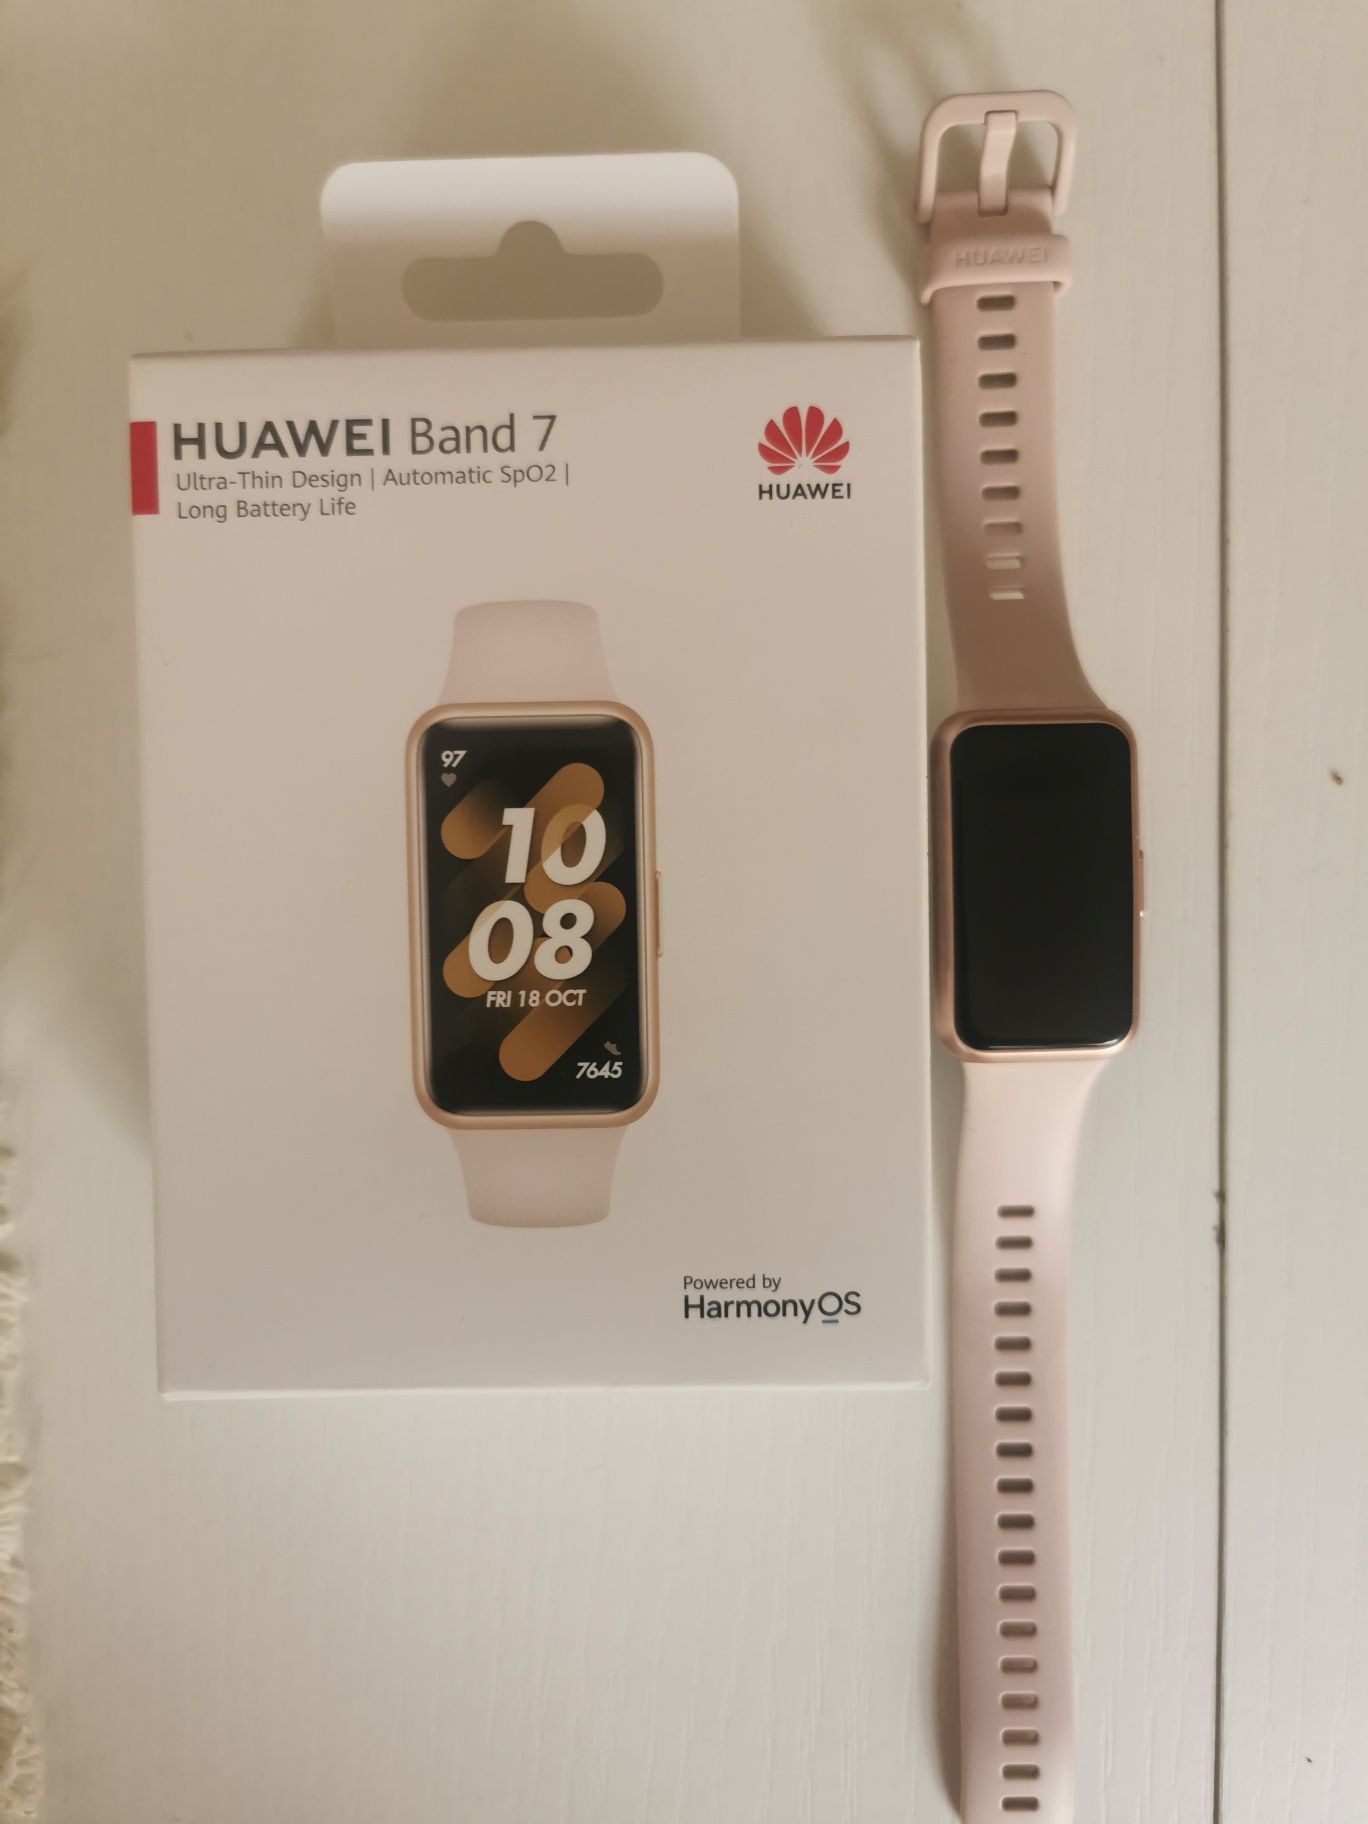 Smartwatch Huawei Band 7
Nebula Pink
Silikone Strap
Android/ios